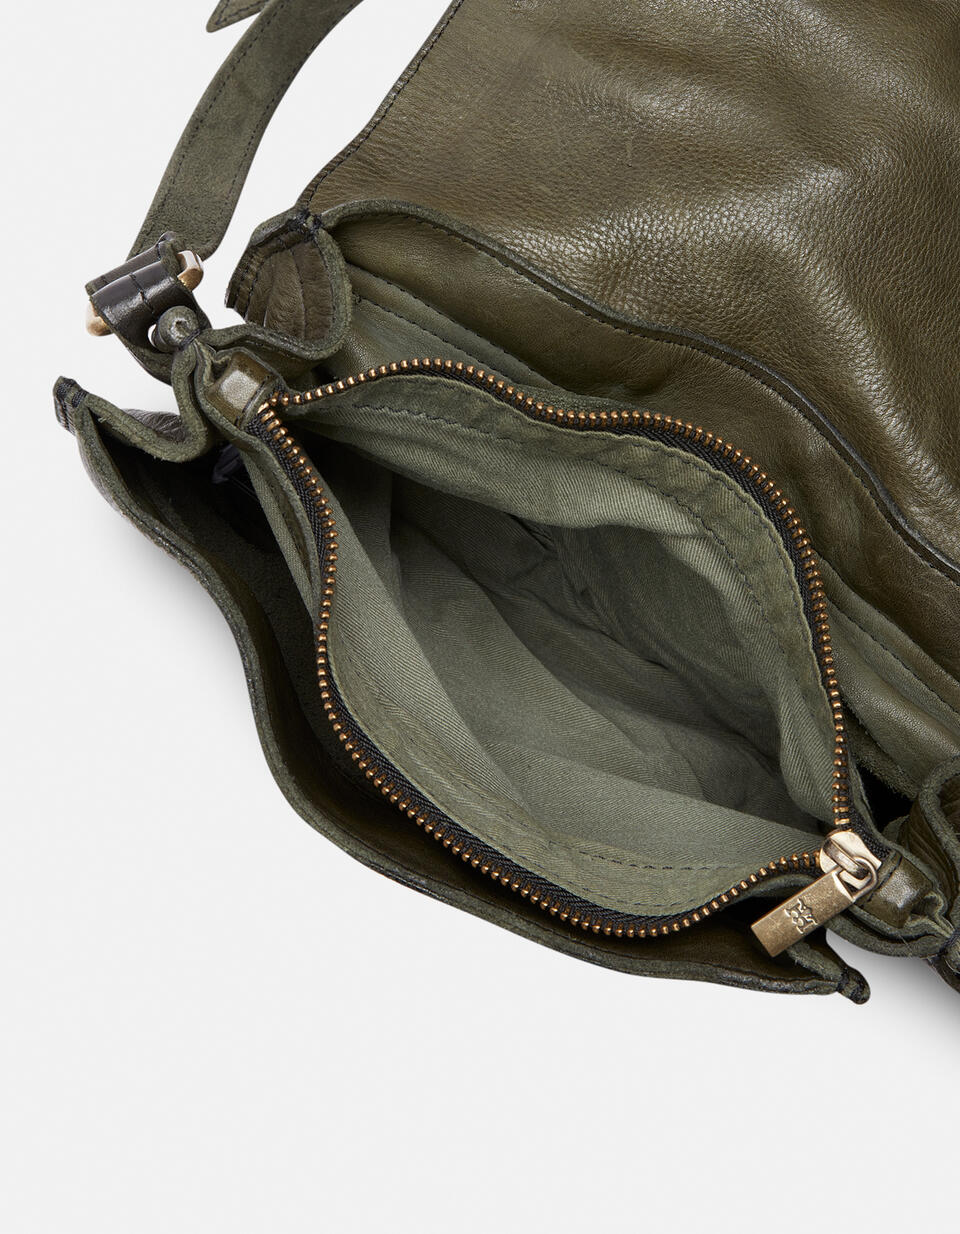 Millennial bag in natural leather - Crossbody Bags - MEN'S BAGS | bags FORESTA - Crossbody Bags - MEN'S BAGS | bagsCuoieria Fiorentina